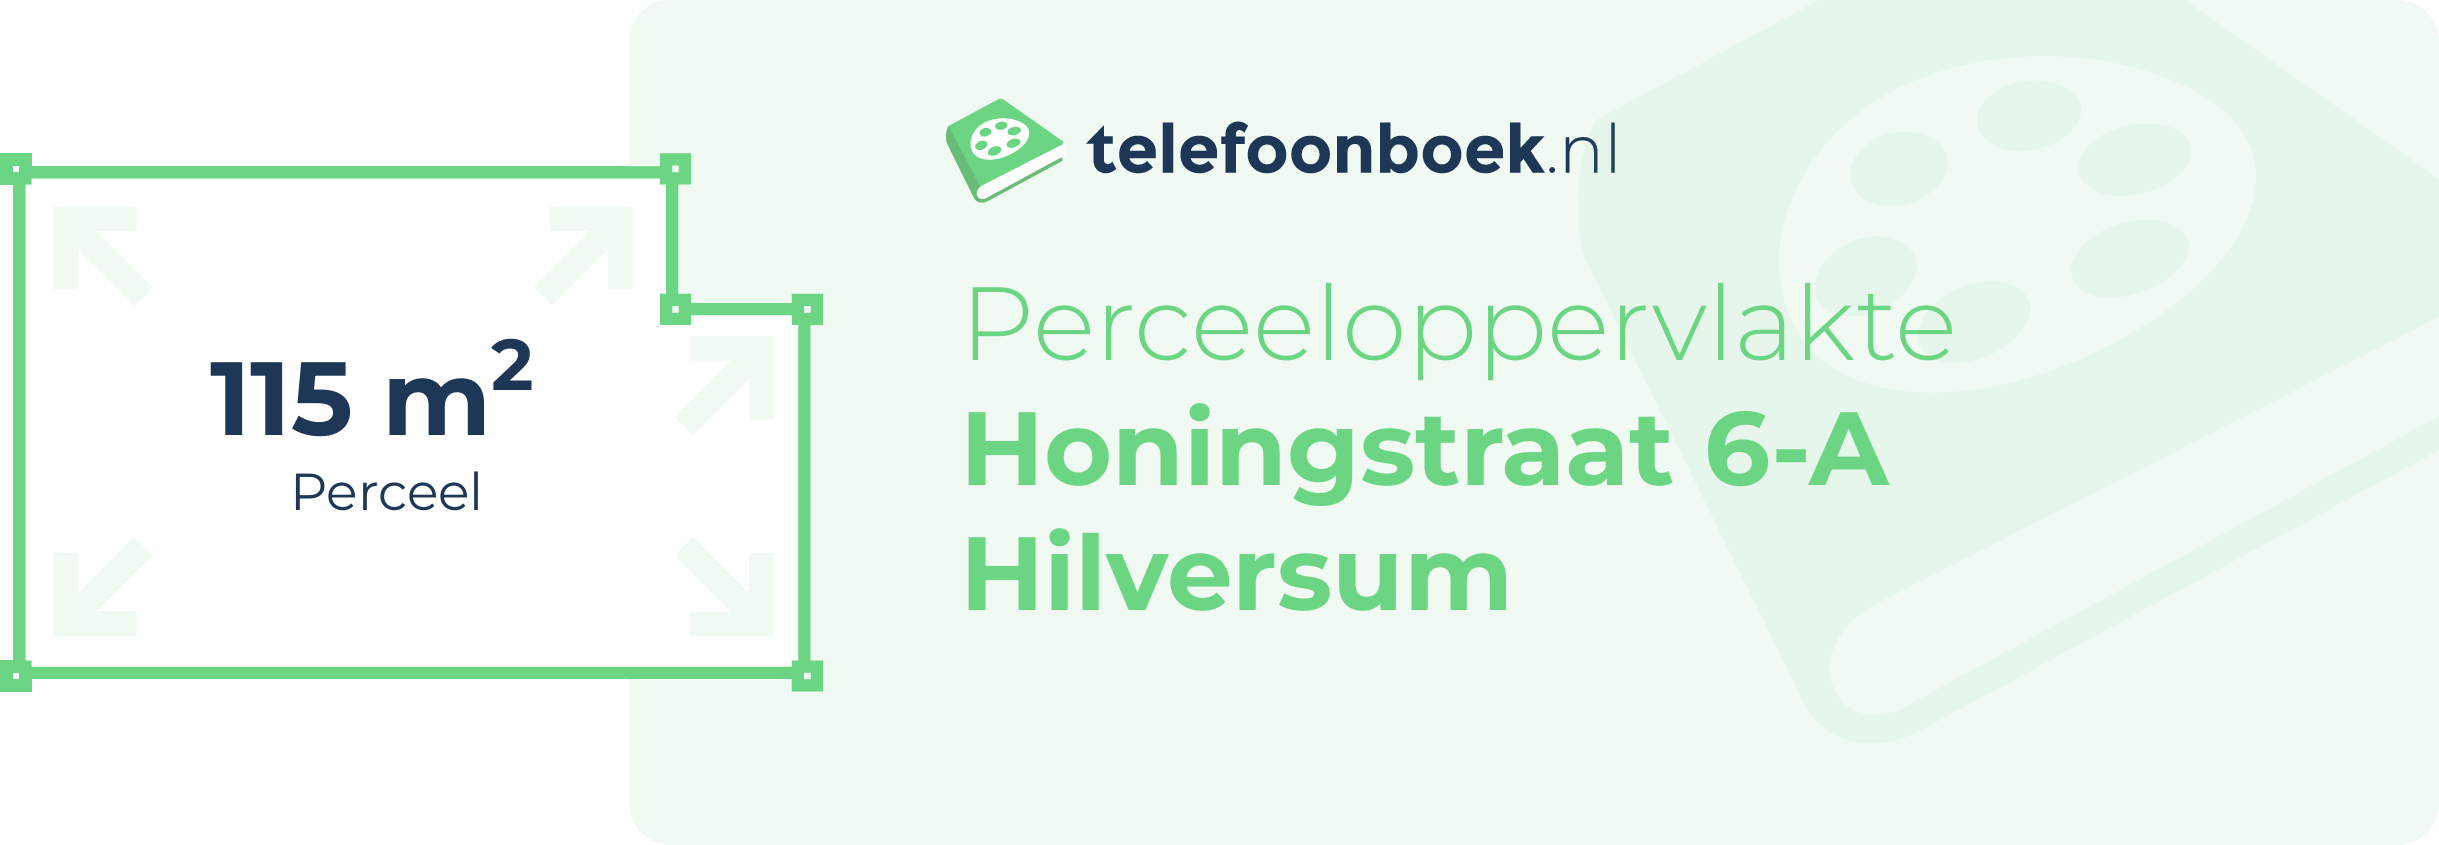 Perceeloppervlakte Honingstraat 6-A Hilversum